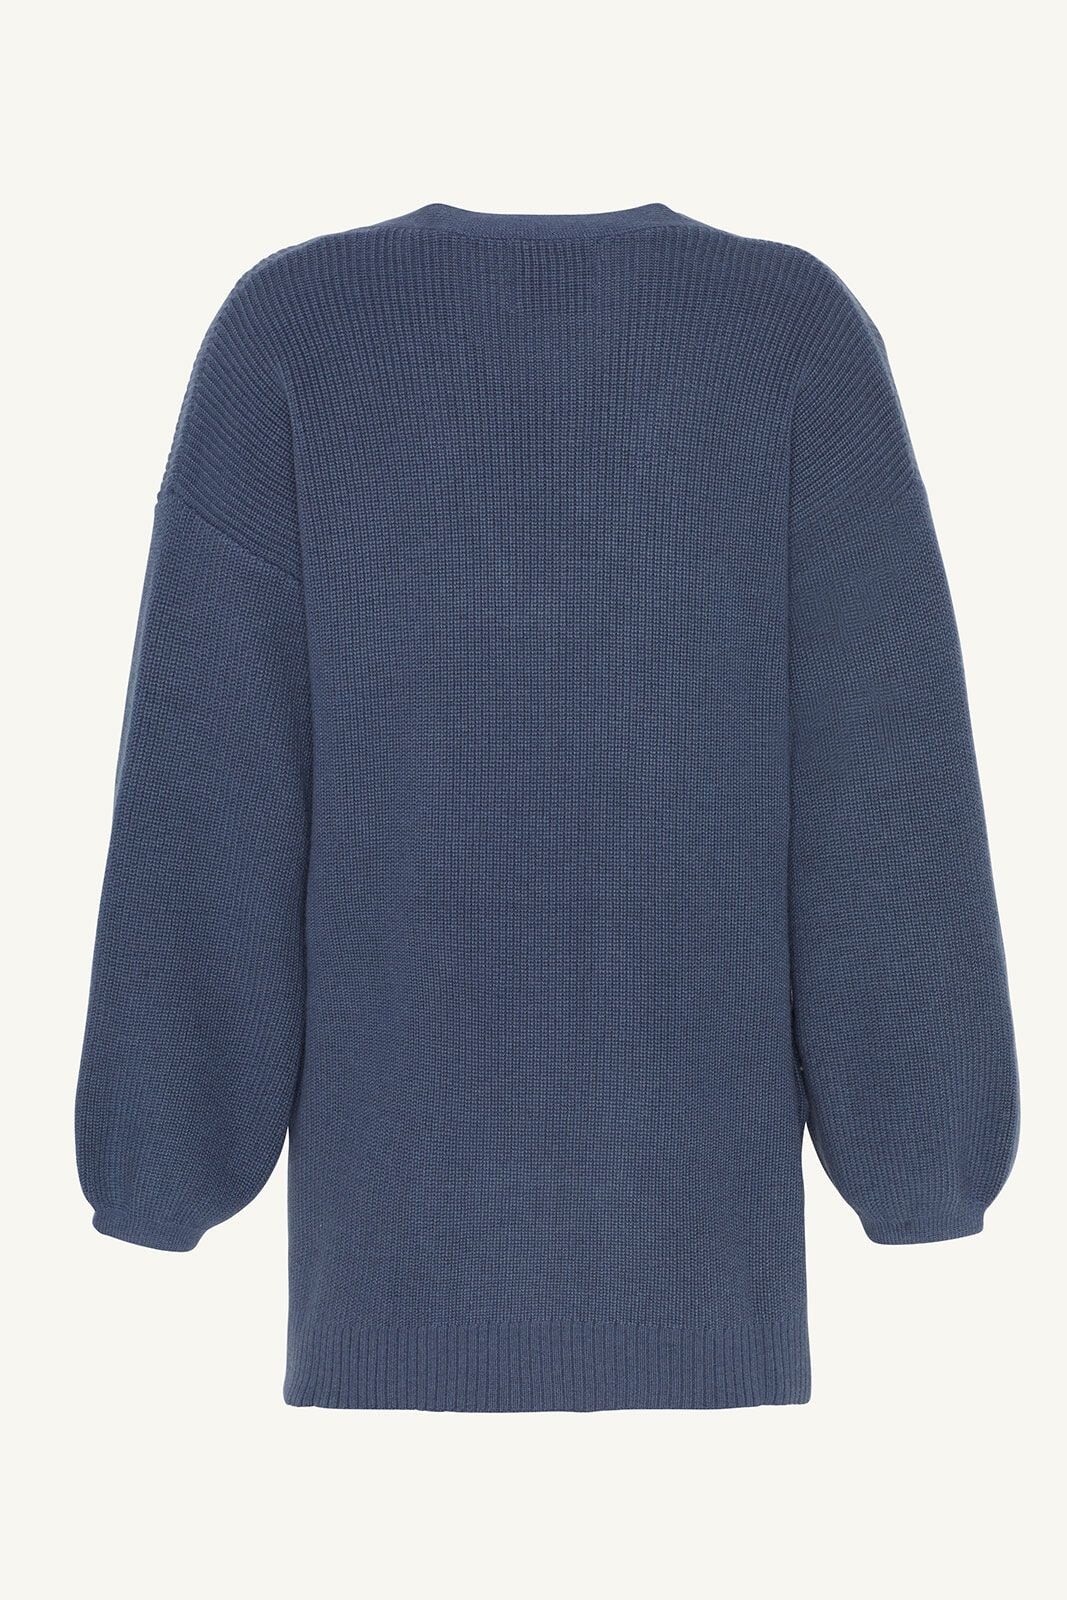 Merino Wool Balloon Sleeve Knit Cardigan - Denim Blue Clothing Veiled 